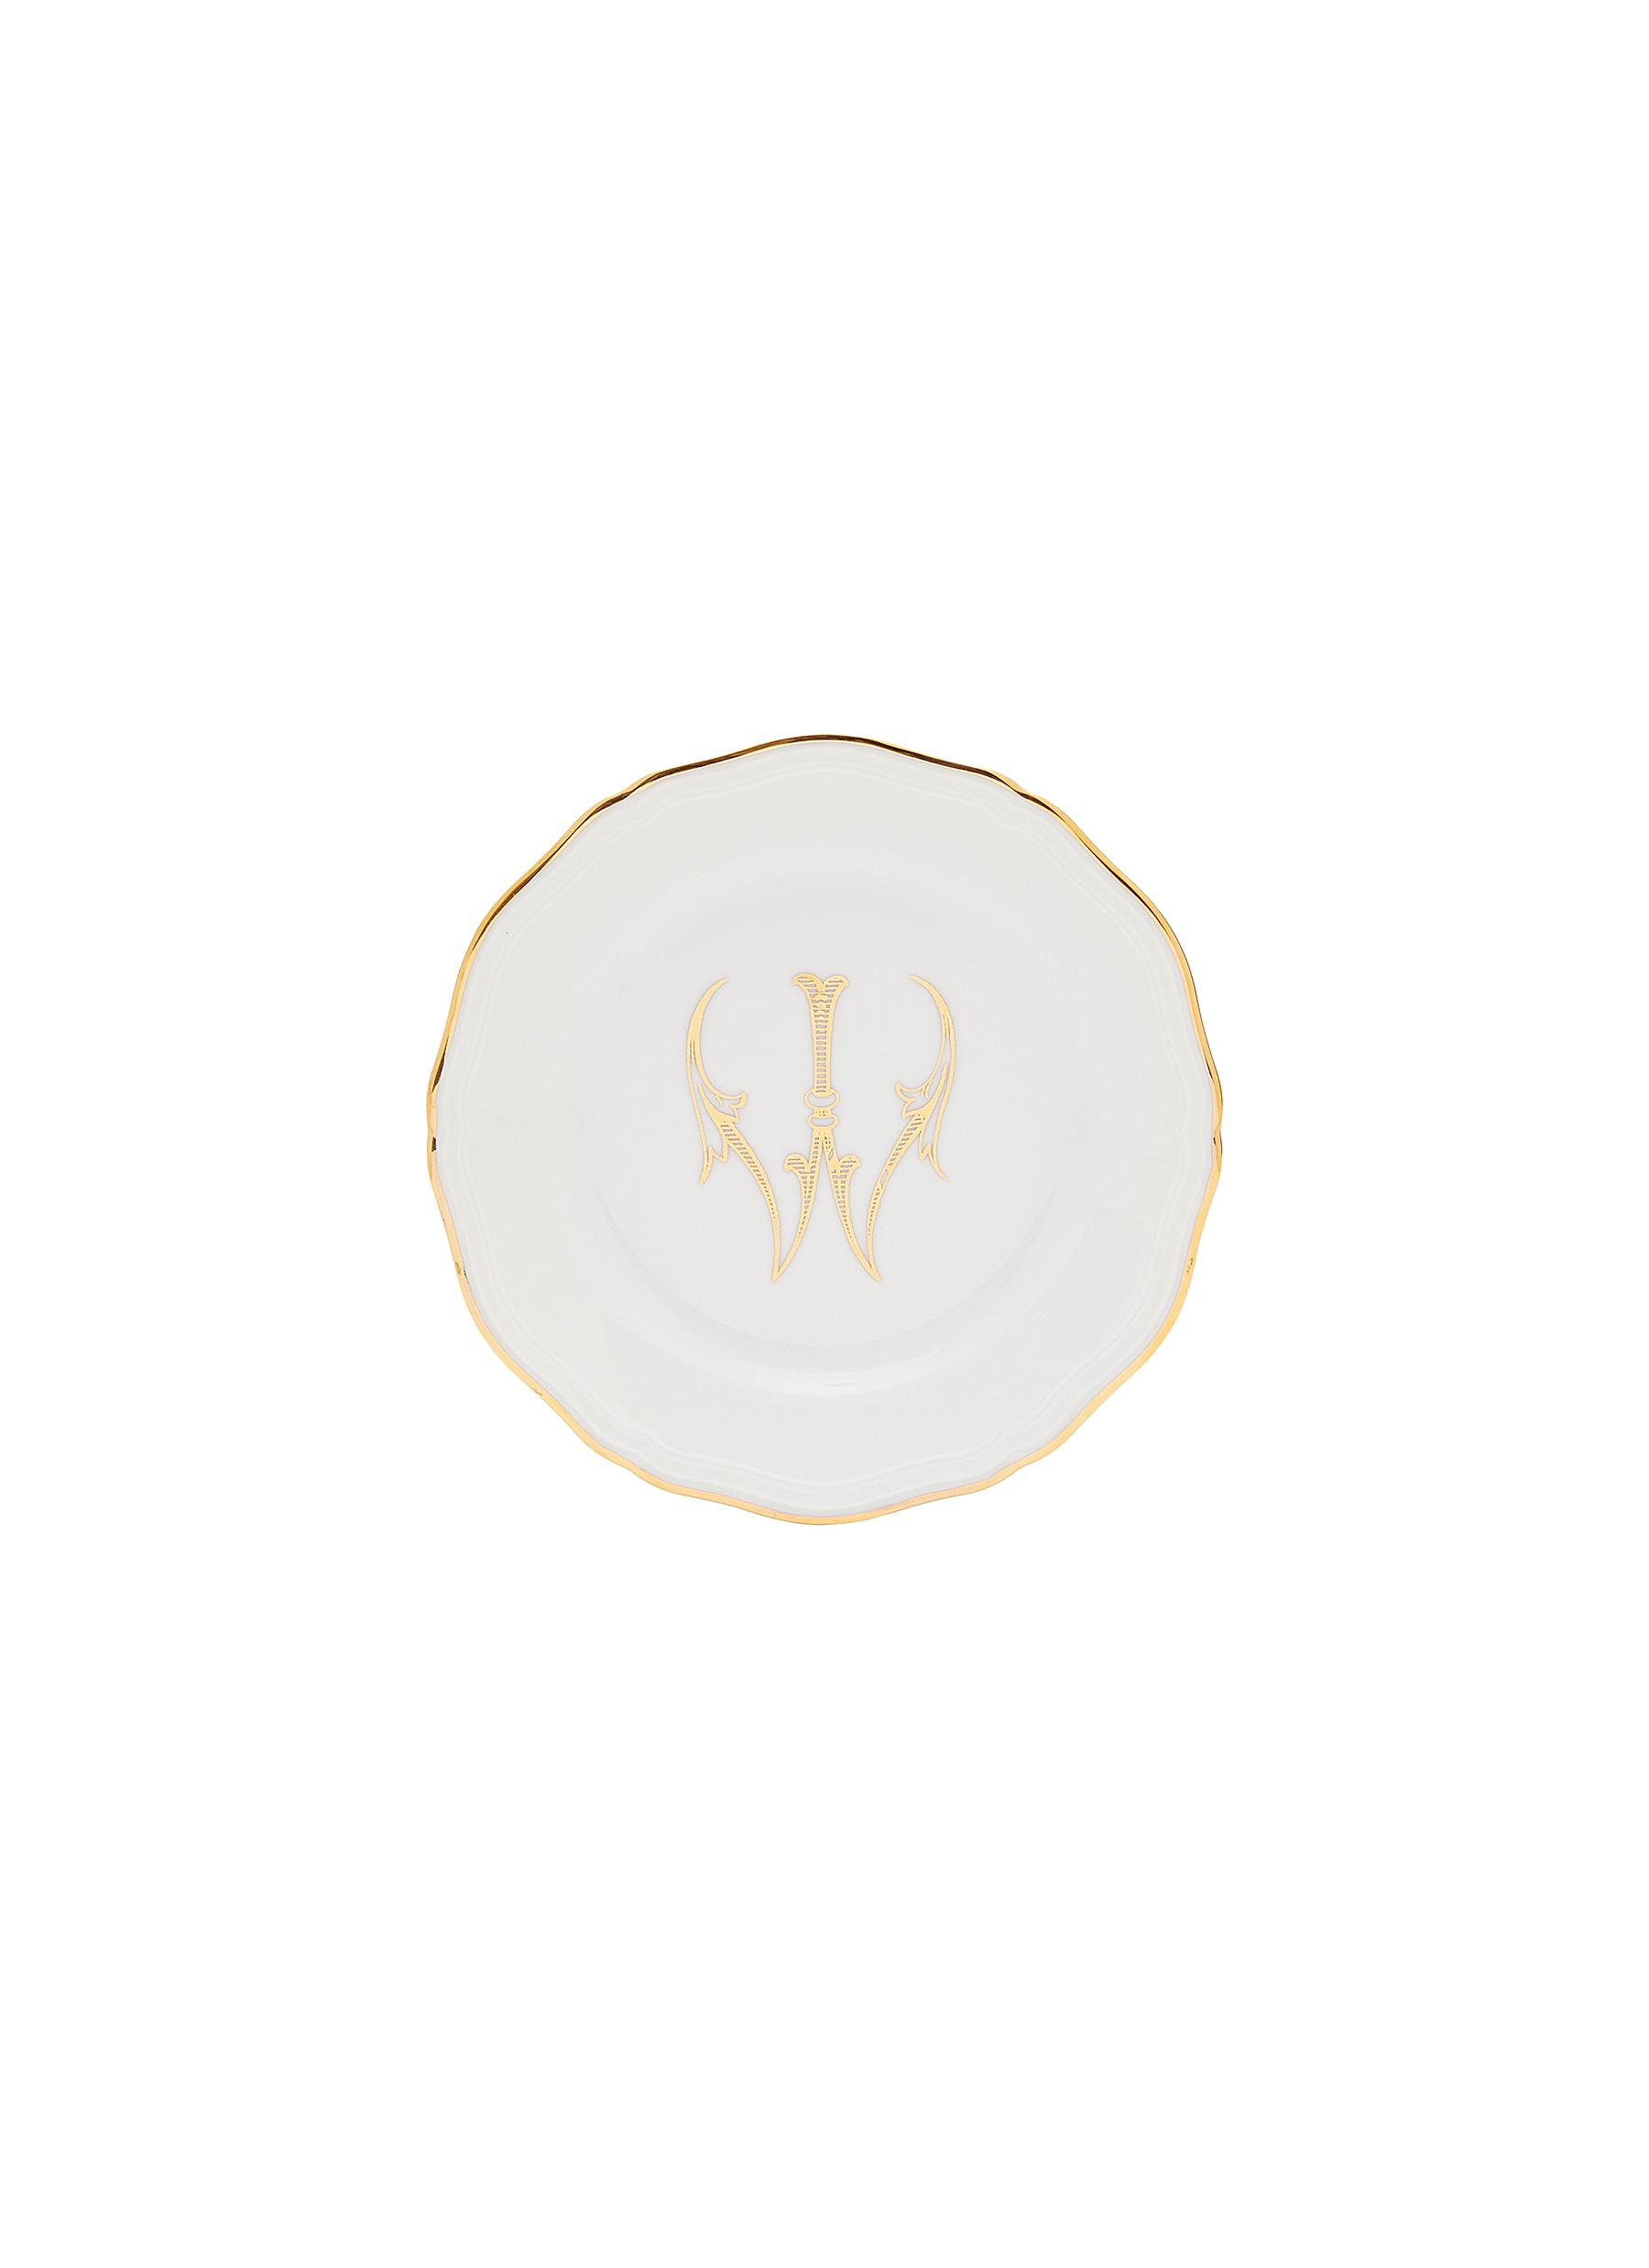 Corona Monogram Oro’ W Initial Porcelain Flat Bread Plate - Set of 4